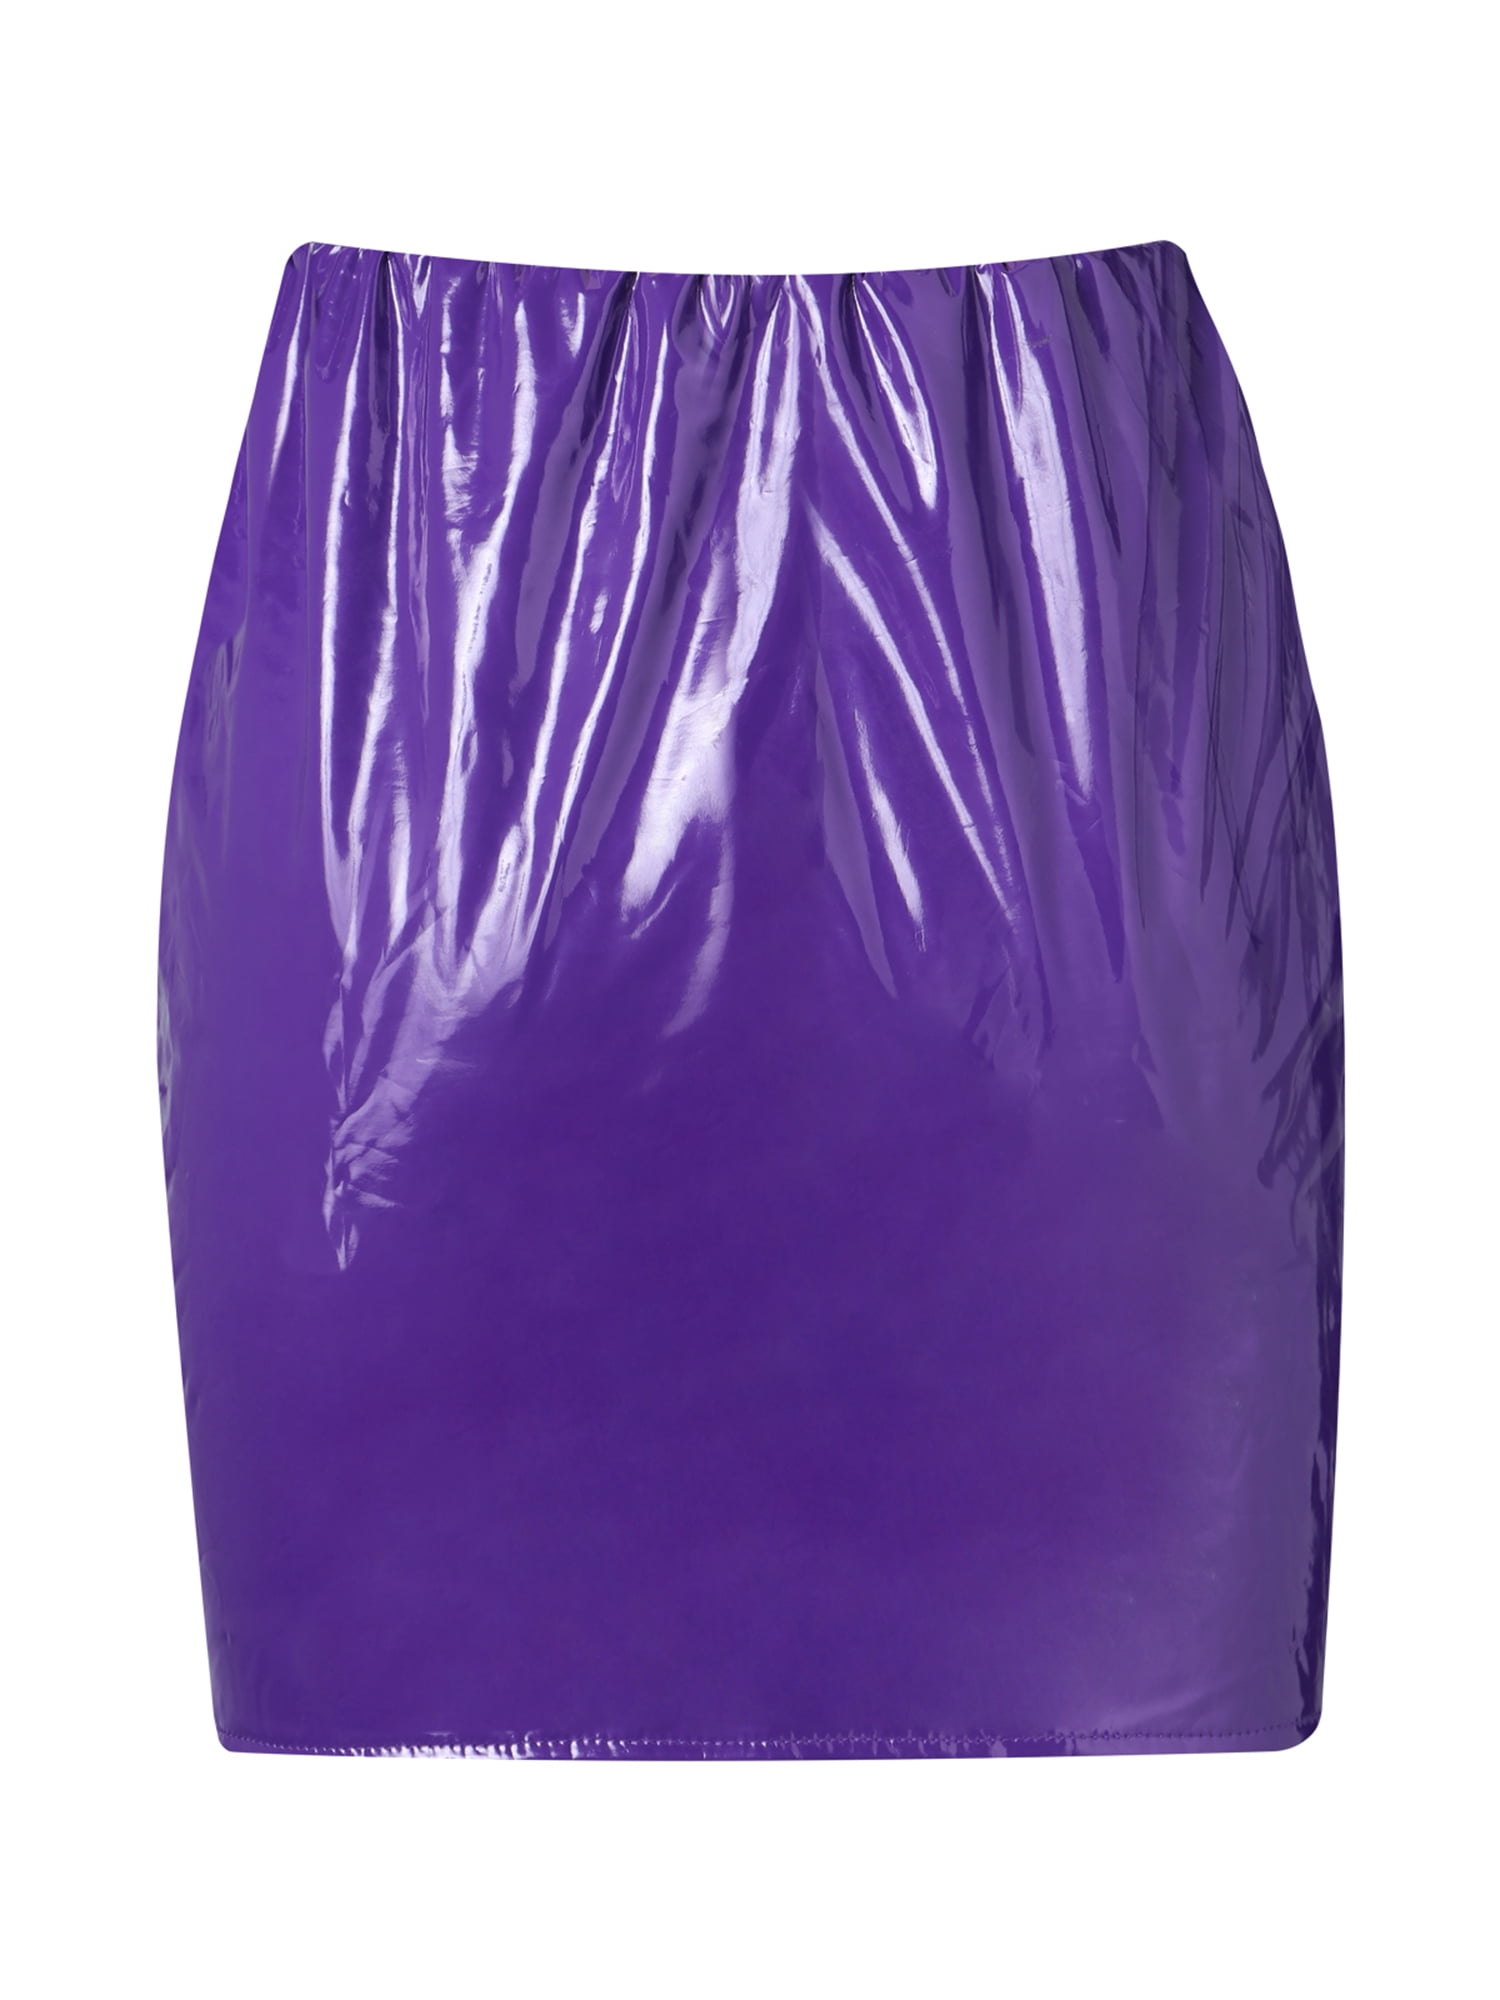 Bagilaanoe Women Neon Leather Bodycon Mini Skirt Shiny Liquid Metallic ...